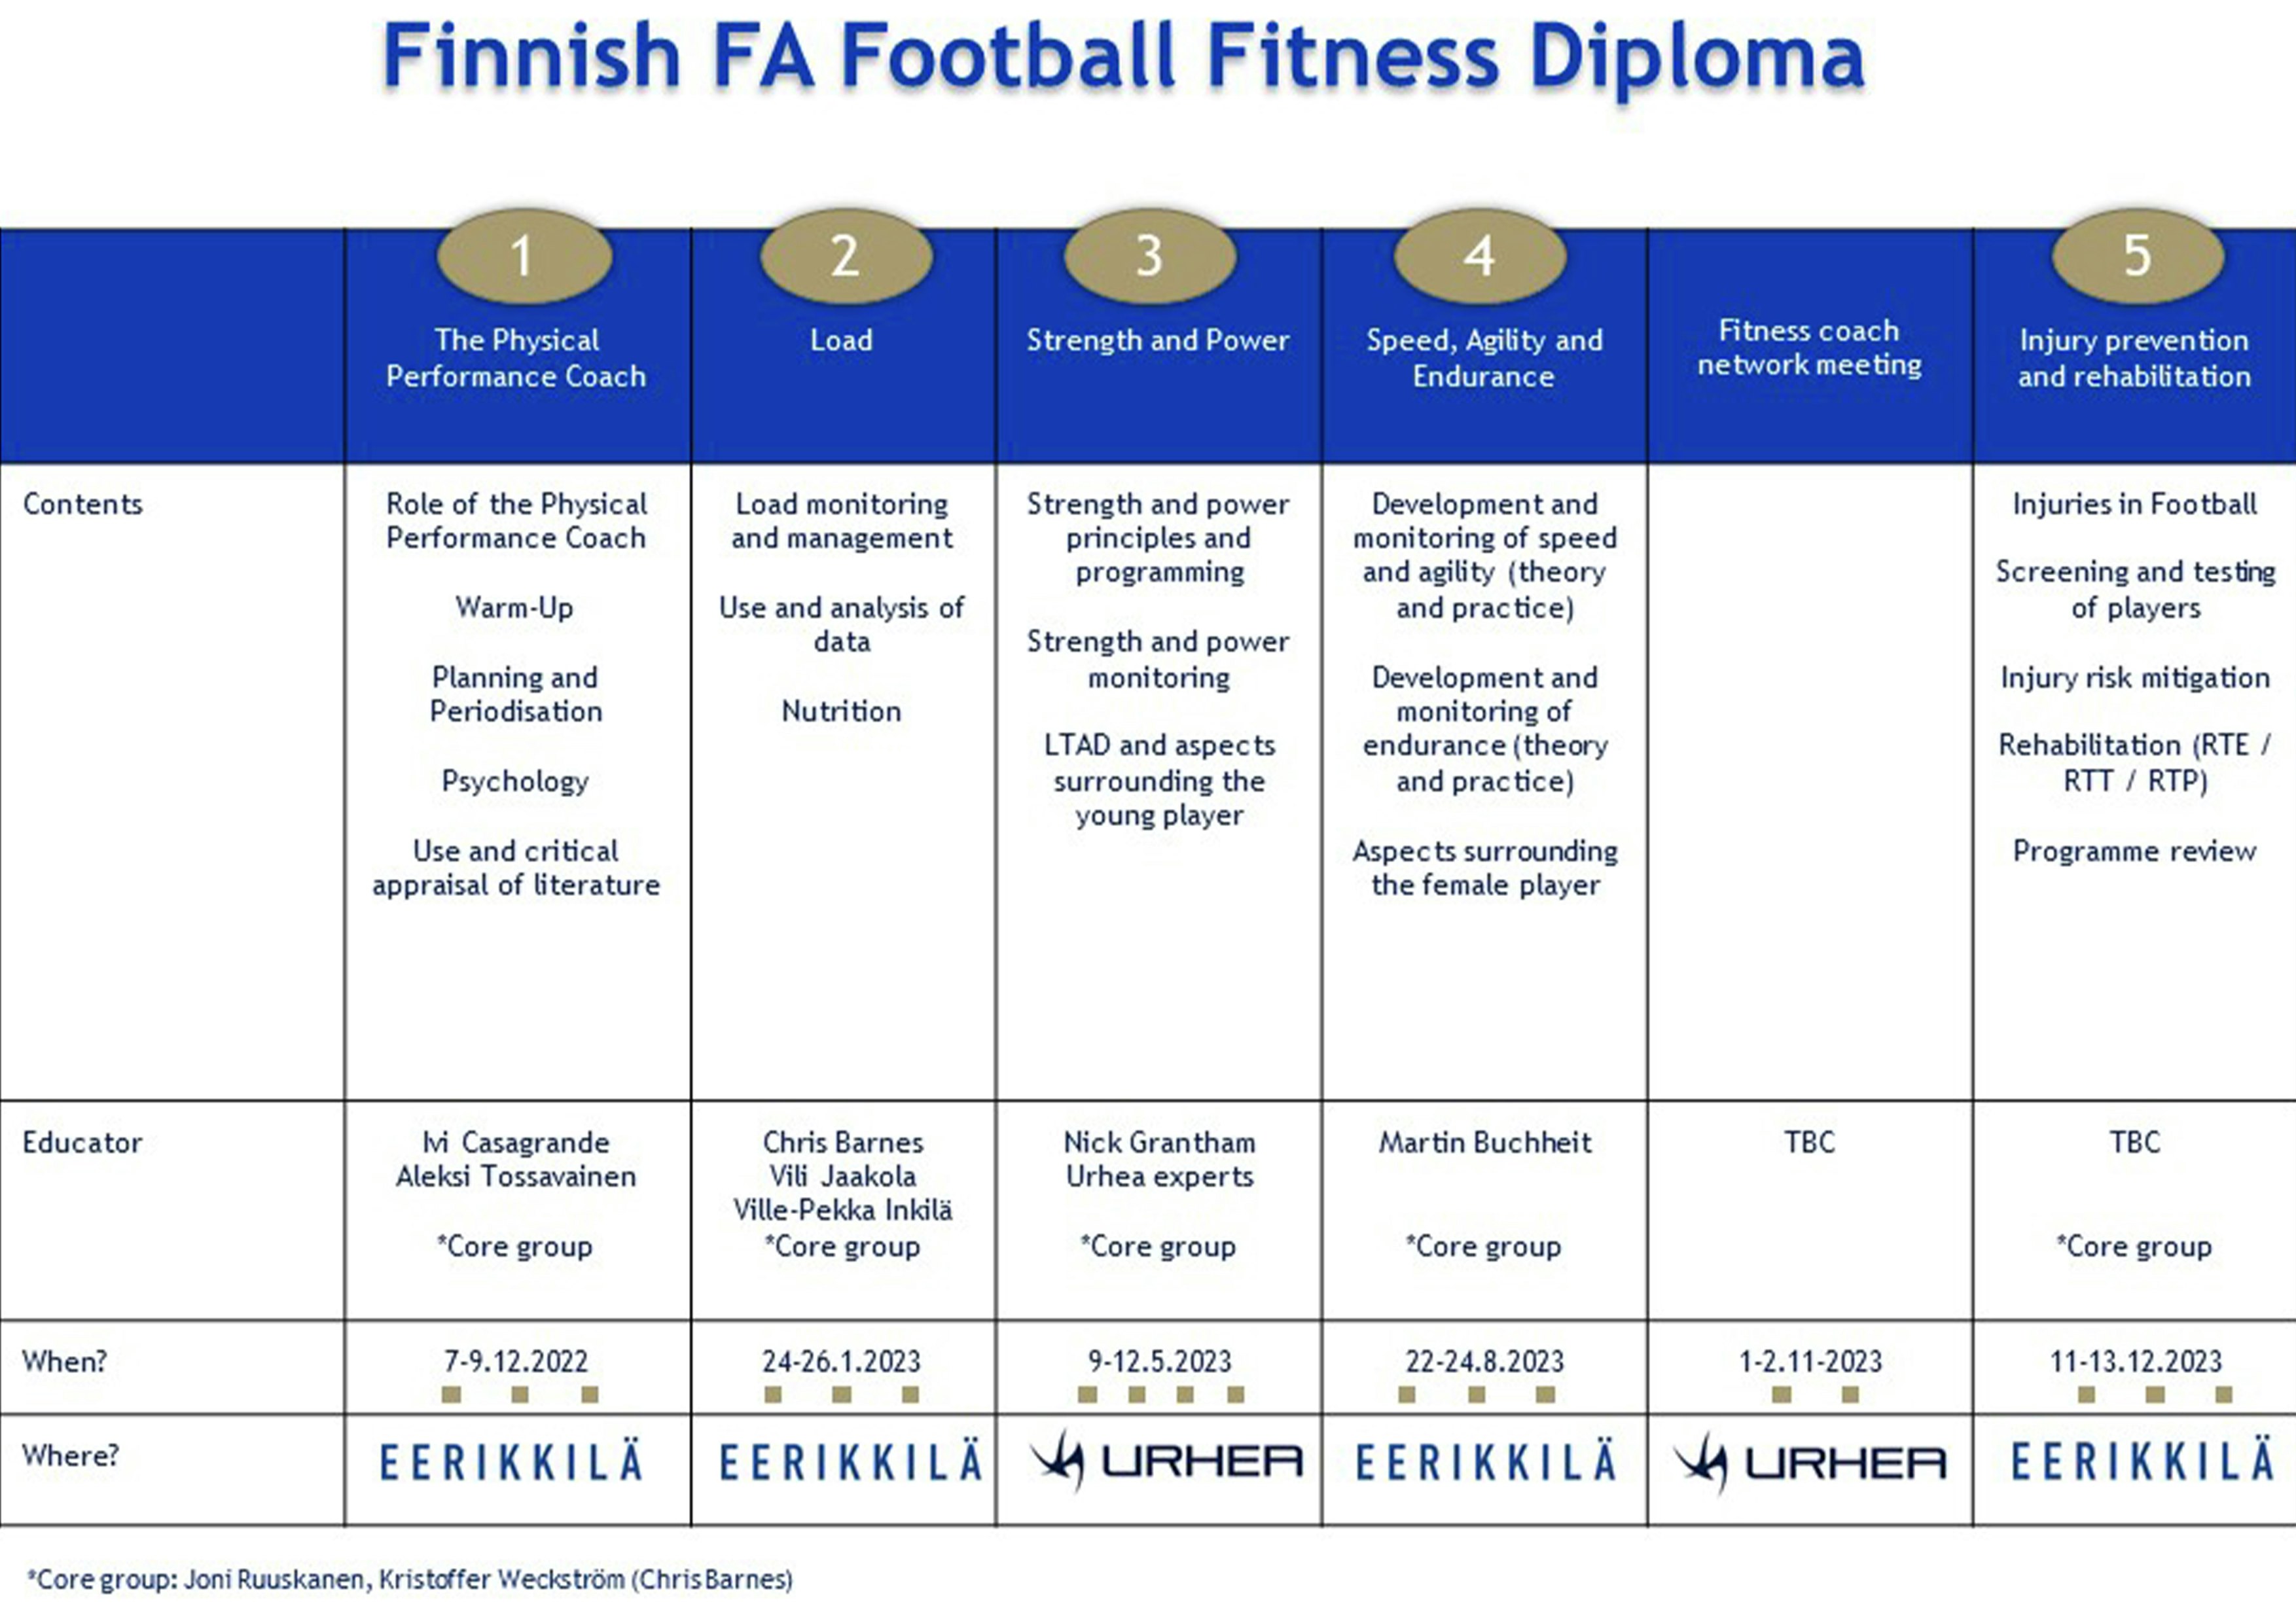 Finnish FA football fitness diploma.